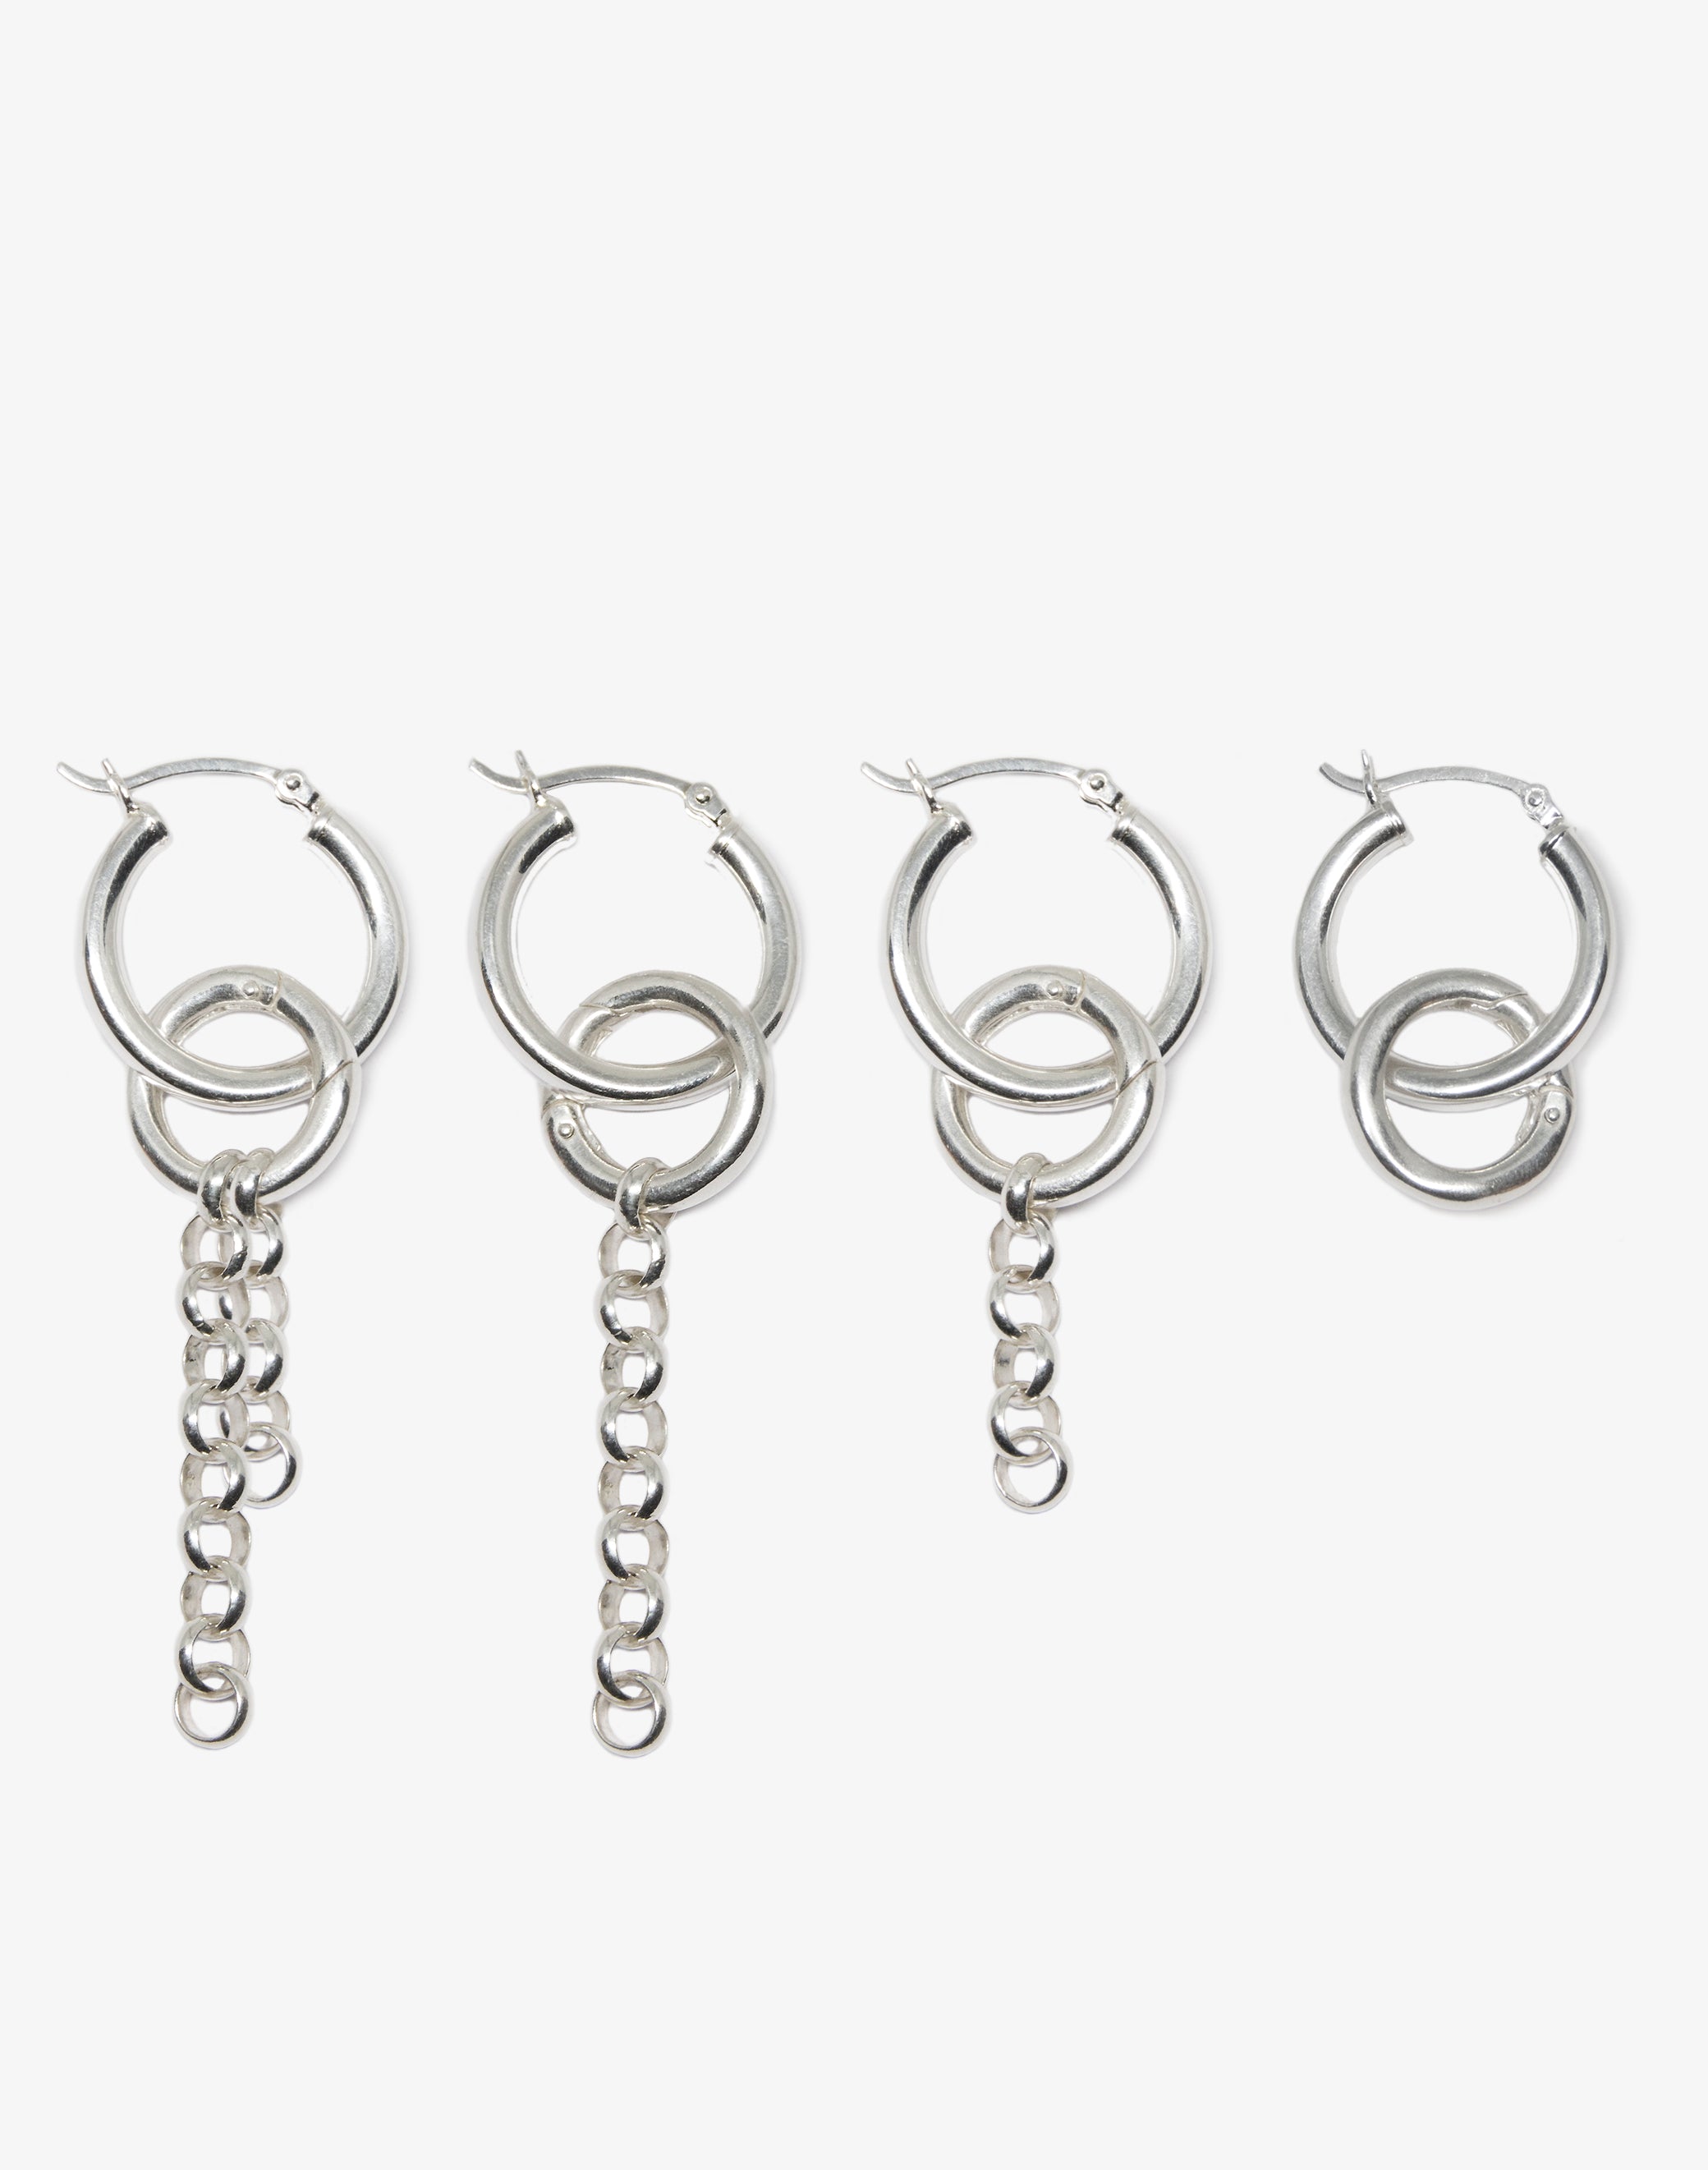 llayers jewelry designer women silver chain hoops earrings jewelry minimal - Made in Brooklyn New York